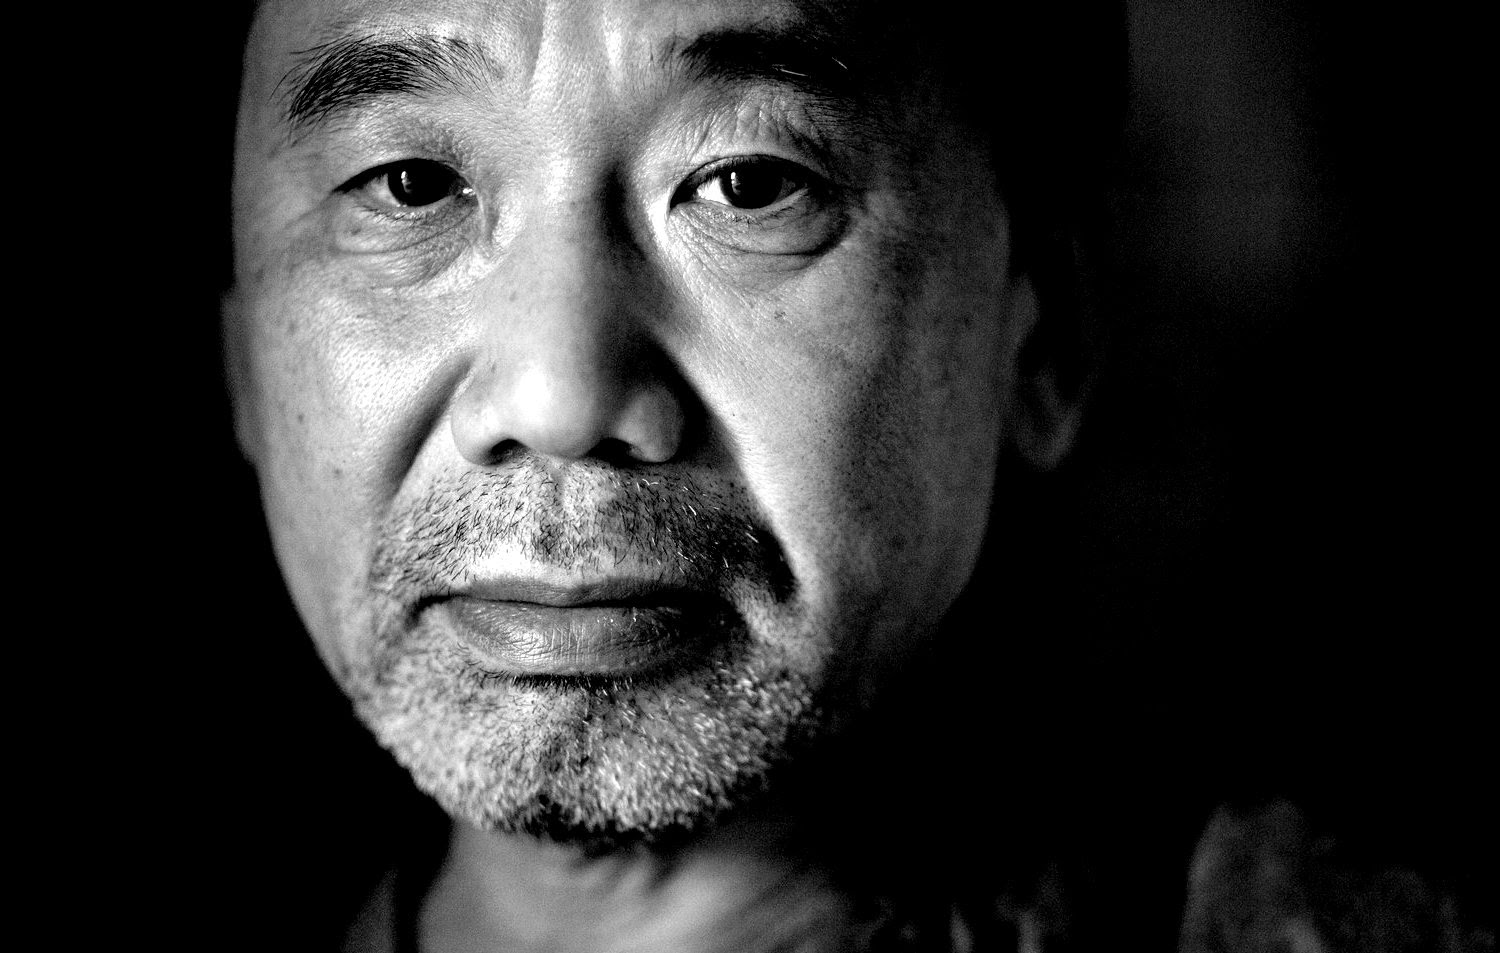 Murakami: bajar al pozo o atravesar el espejo